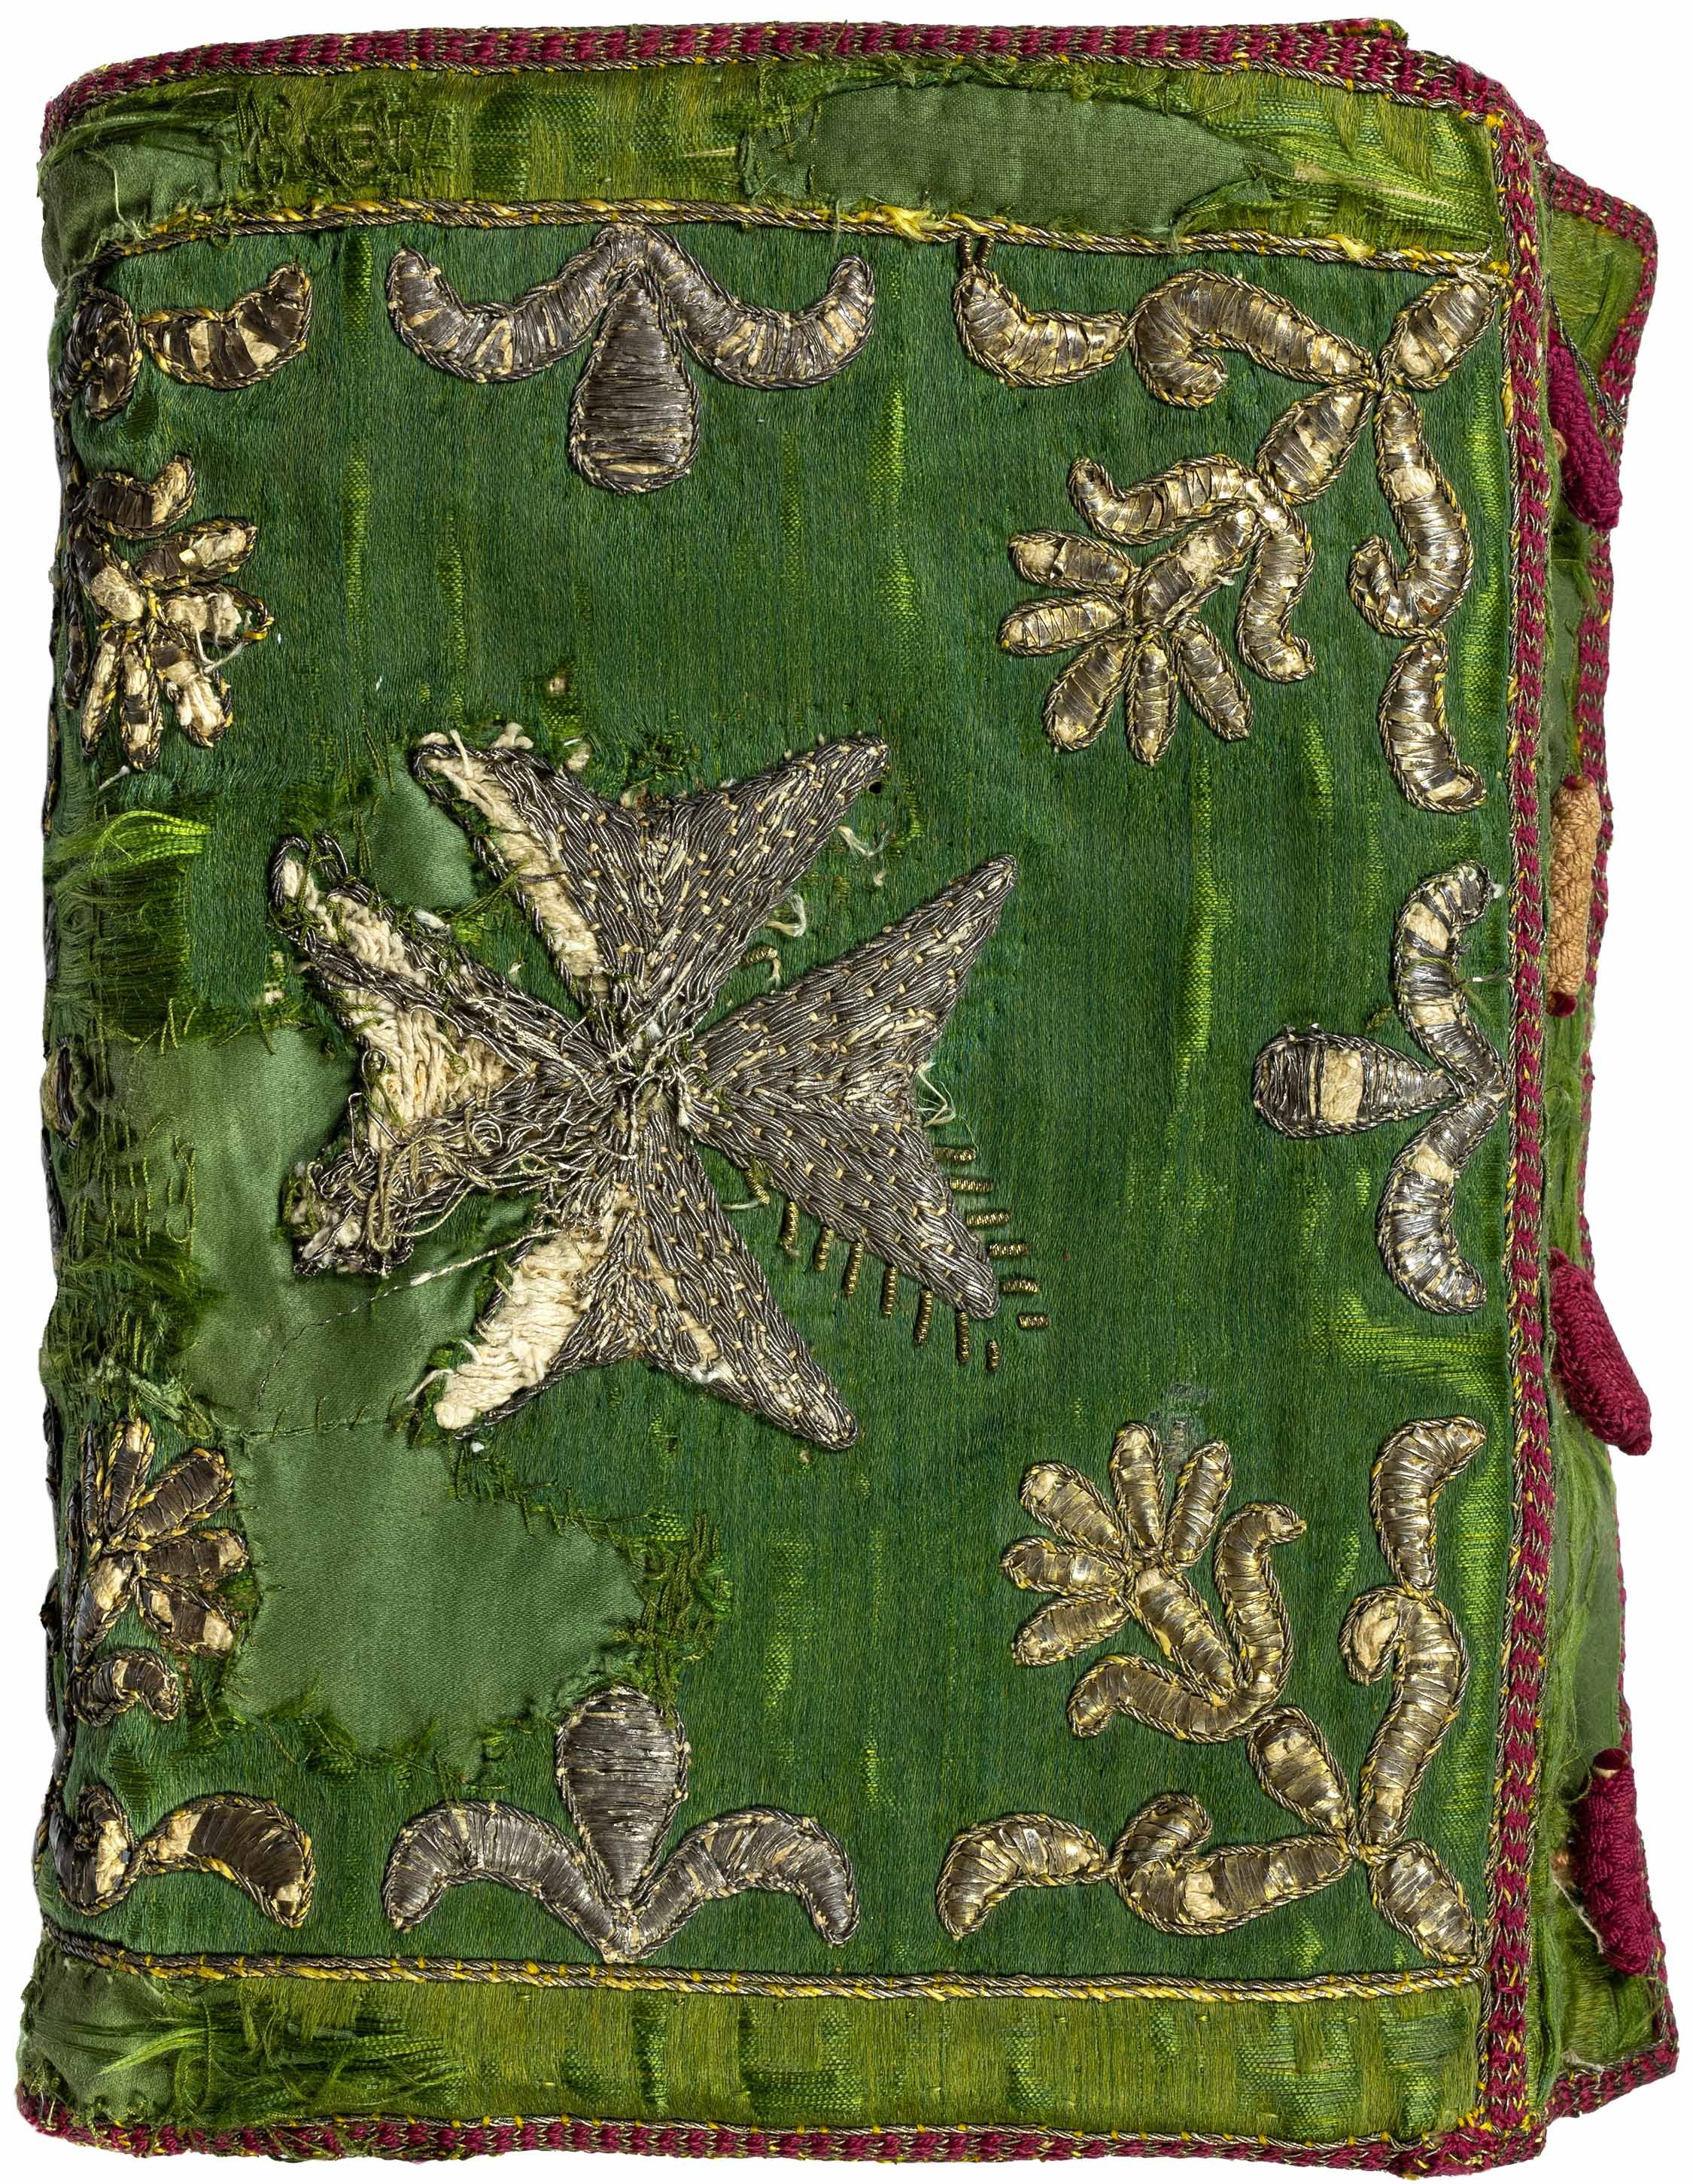 Saint-Carlo-Borromeo-reliquary-bible-plantin-1565-silk-01.jpg